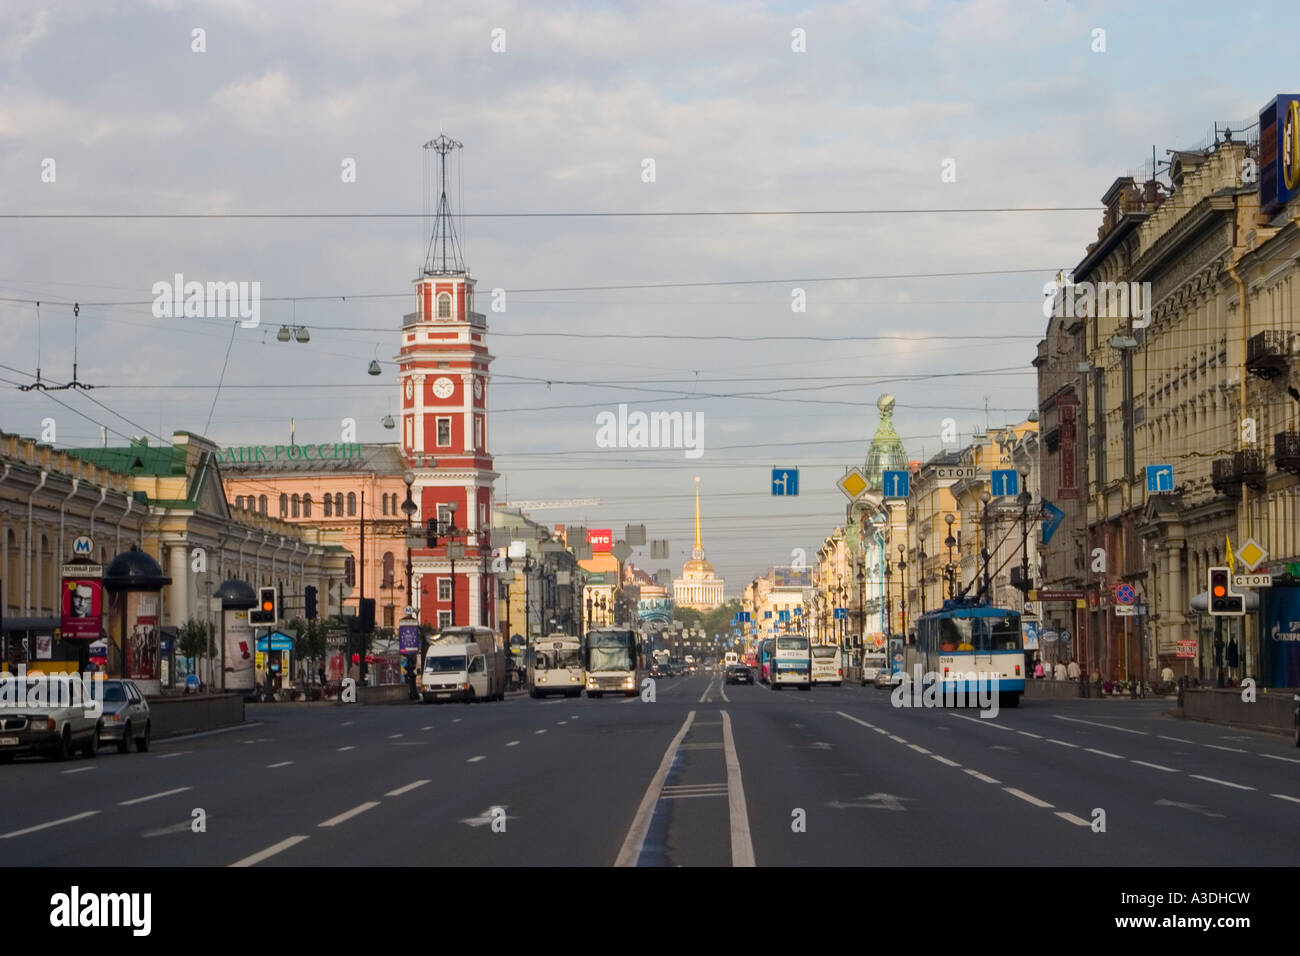 The city duma seen from Nevsky Prospekt, St. Petersburg, Russia. Stock Photo